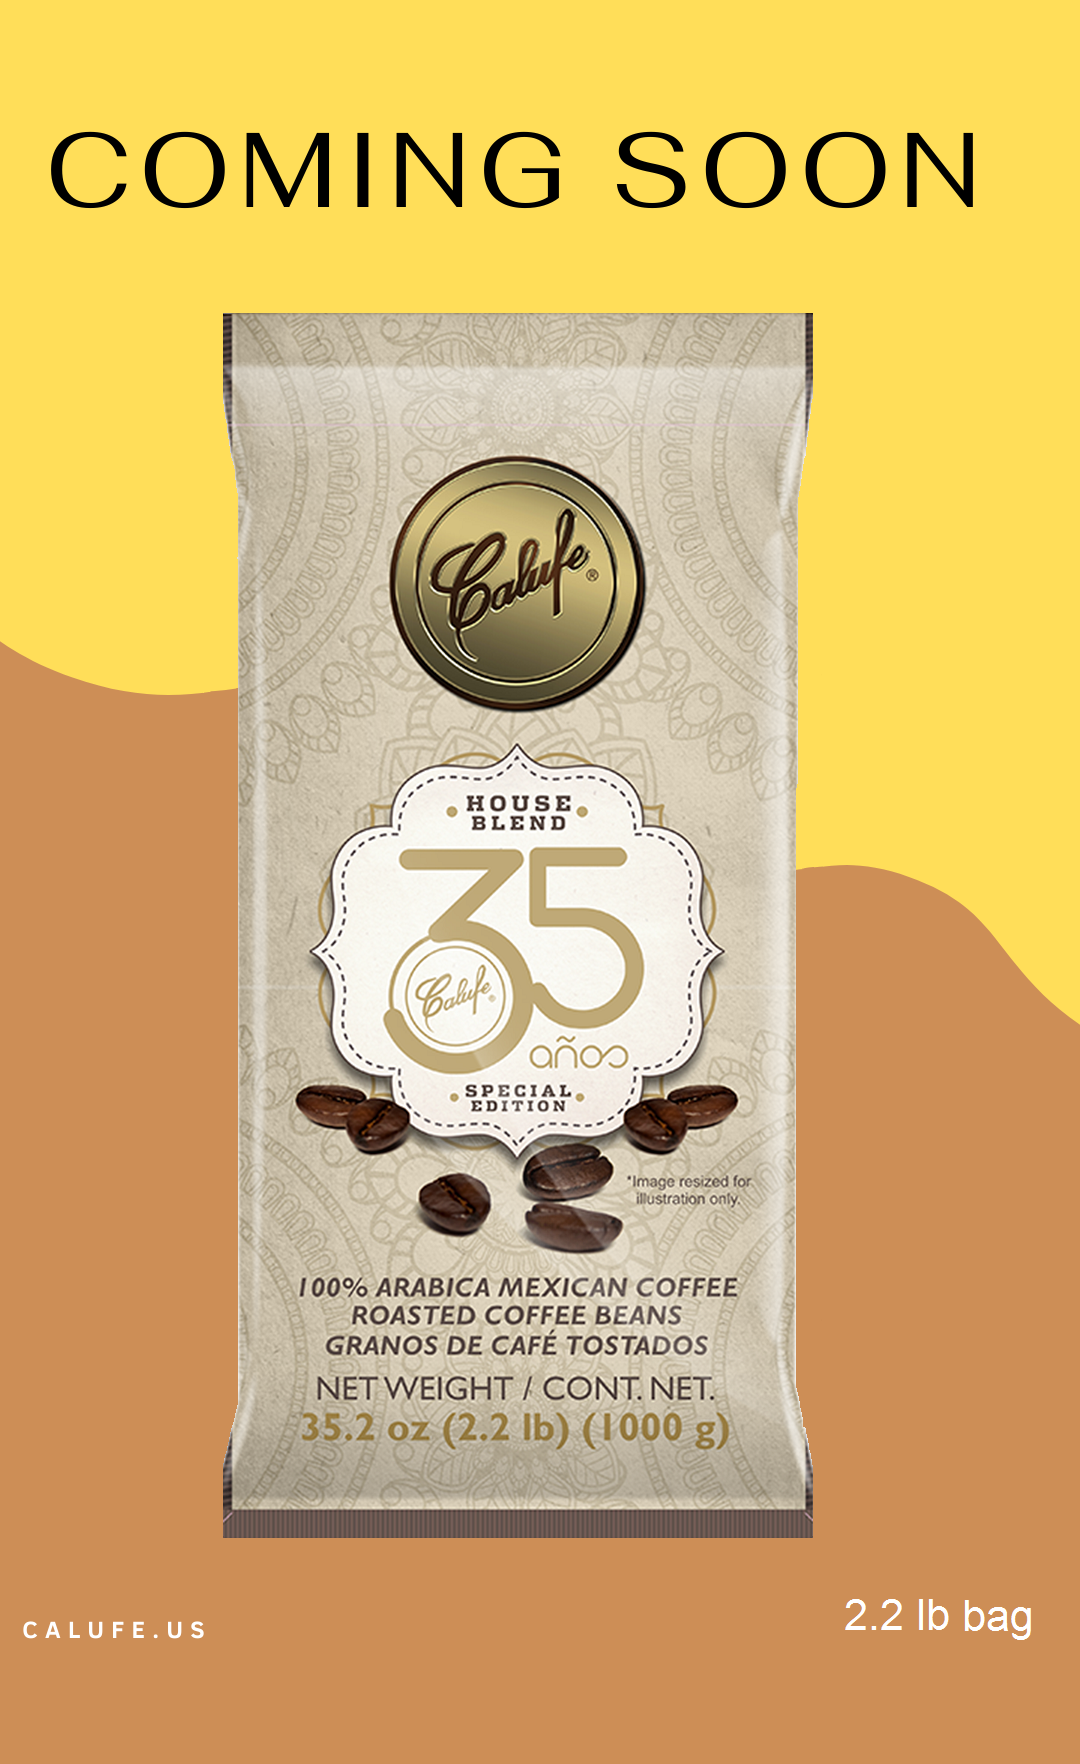 Coming soon: Calufe's 2.2 lb bag of House Blend Single Origin 100% Arabica Coffee